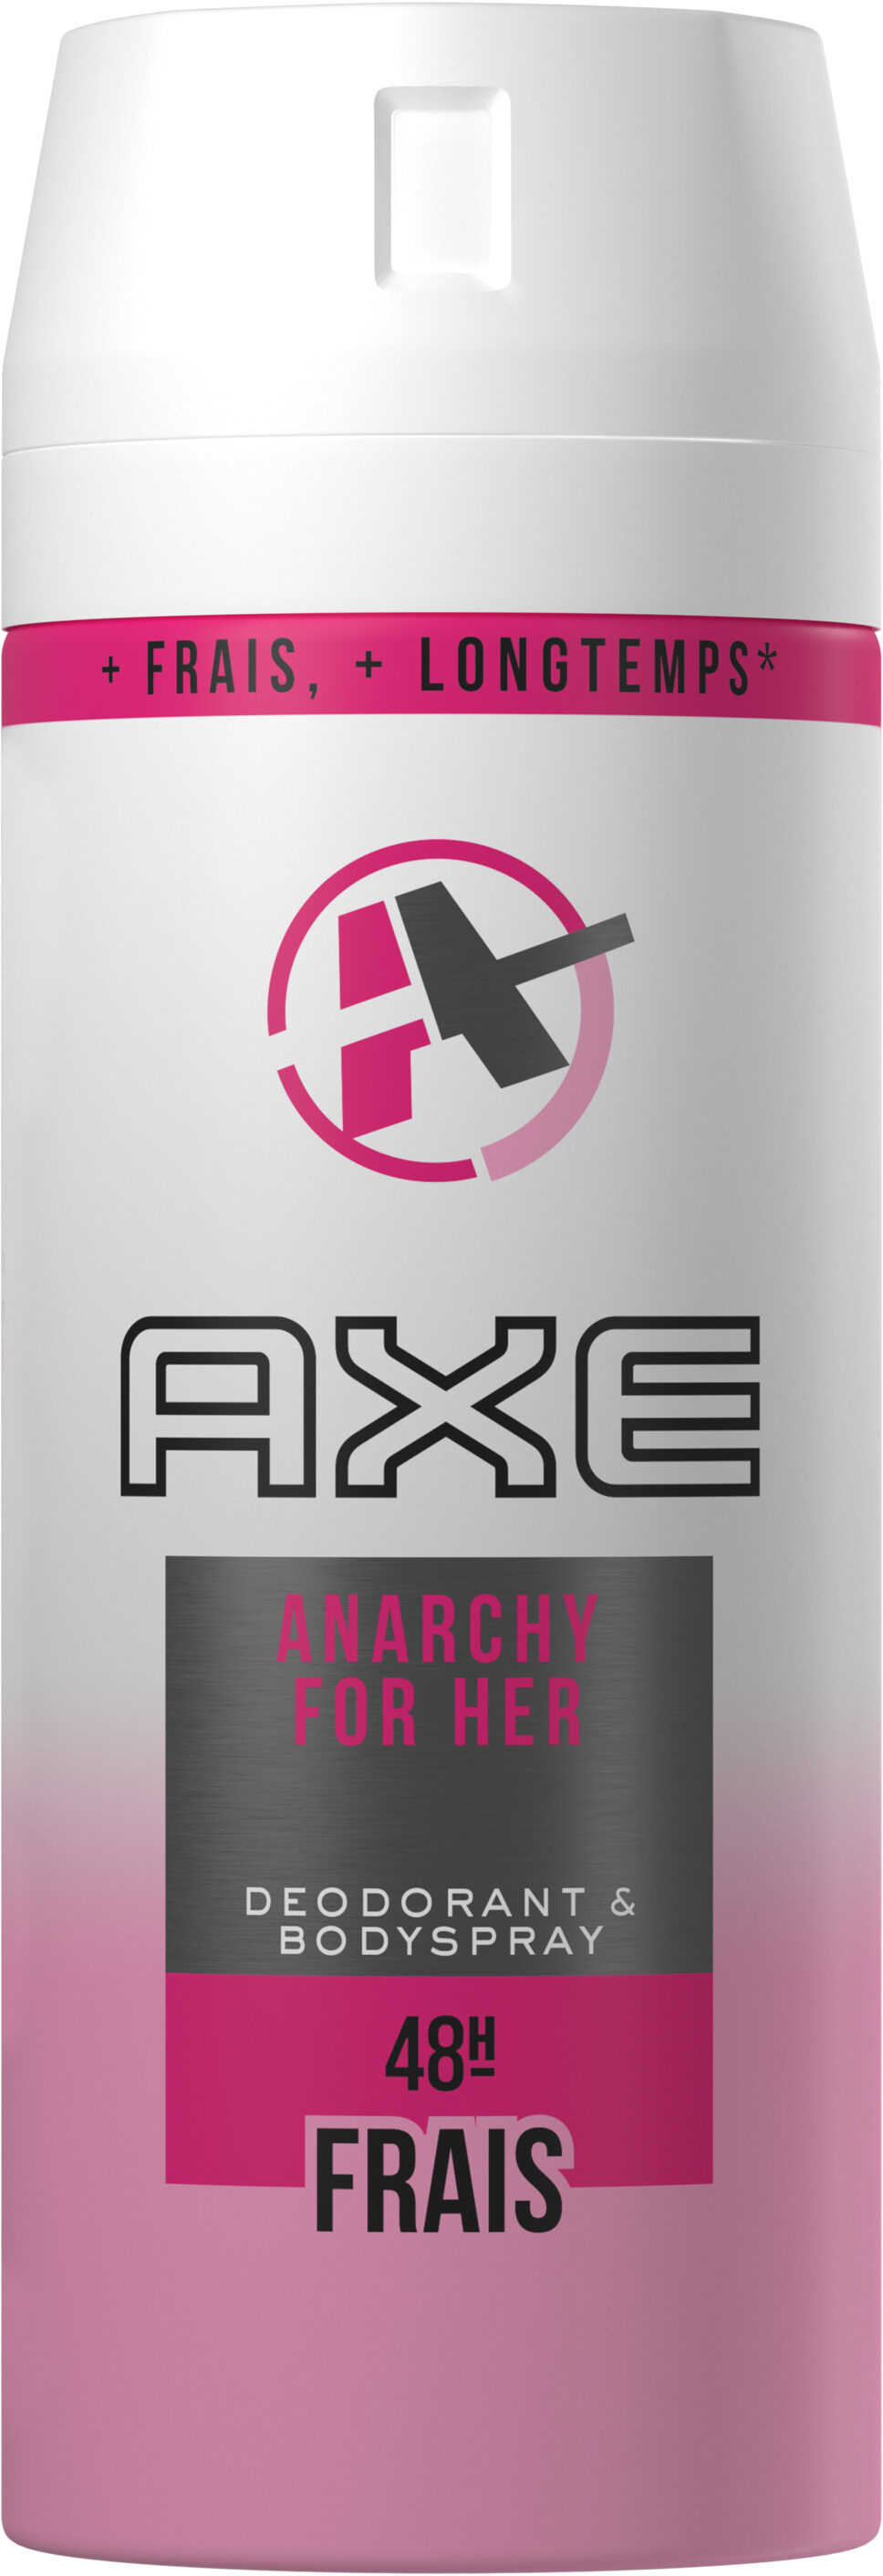 AXE Déodorant Femme Spray Antibactérien Anarchy For Her - Product - fr